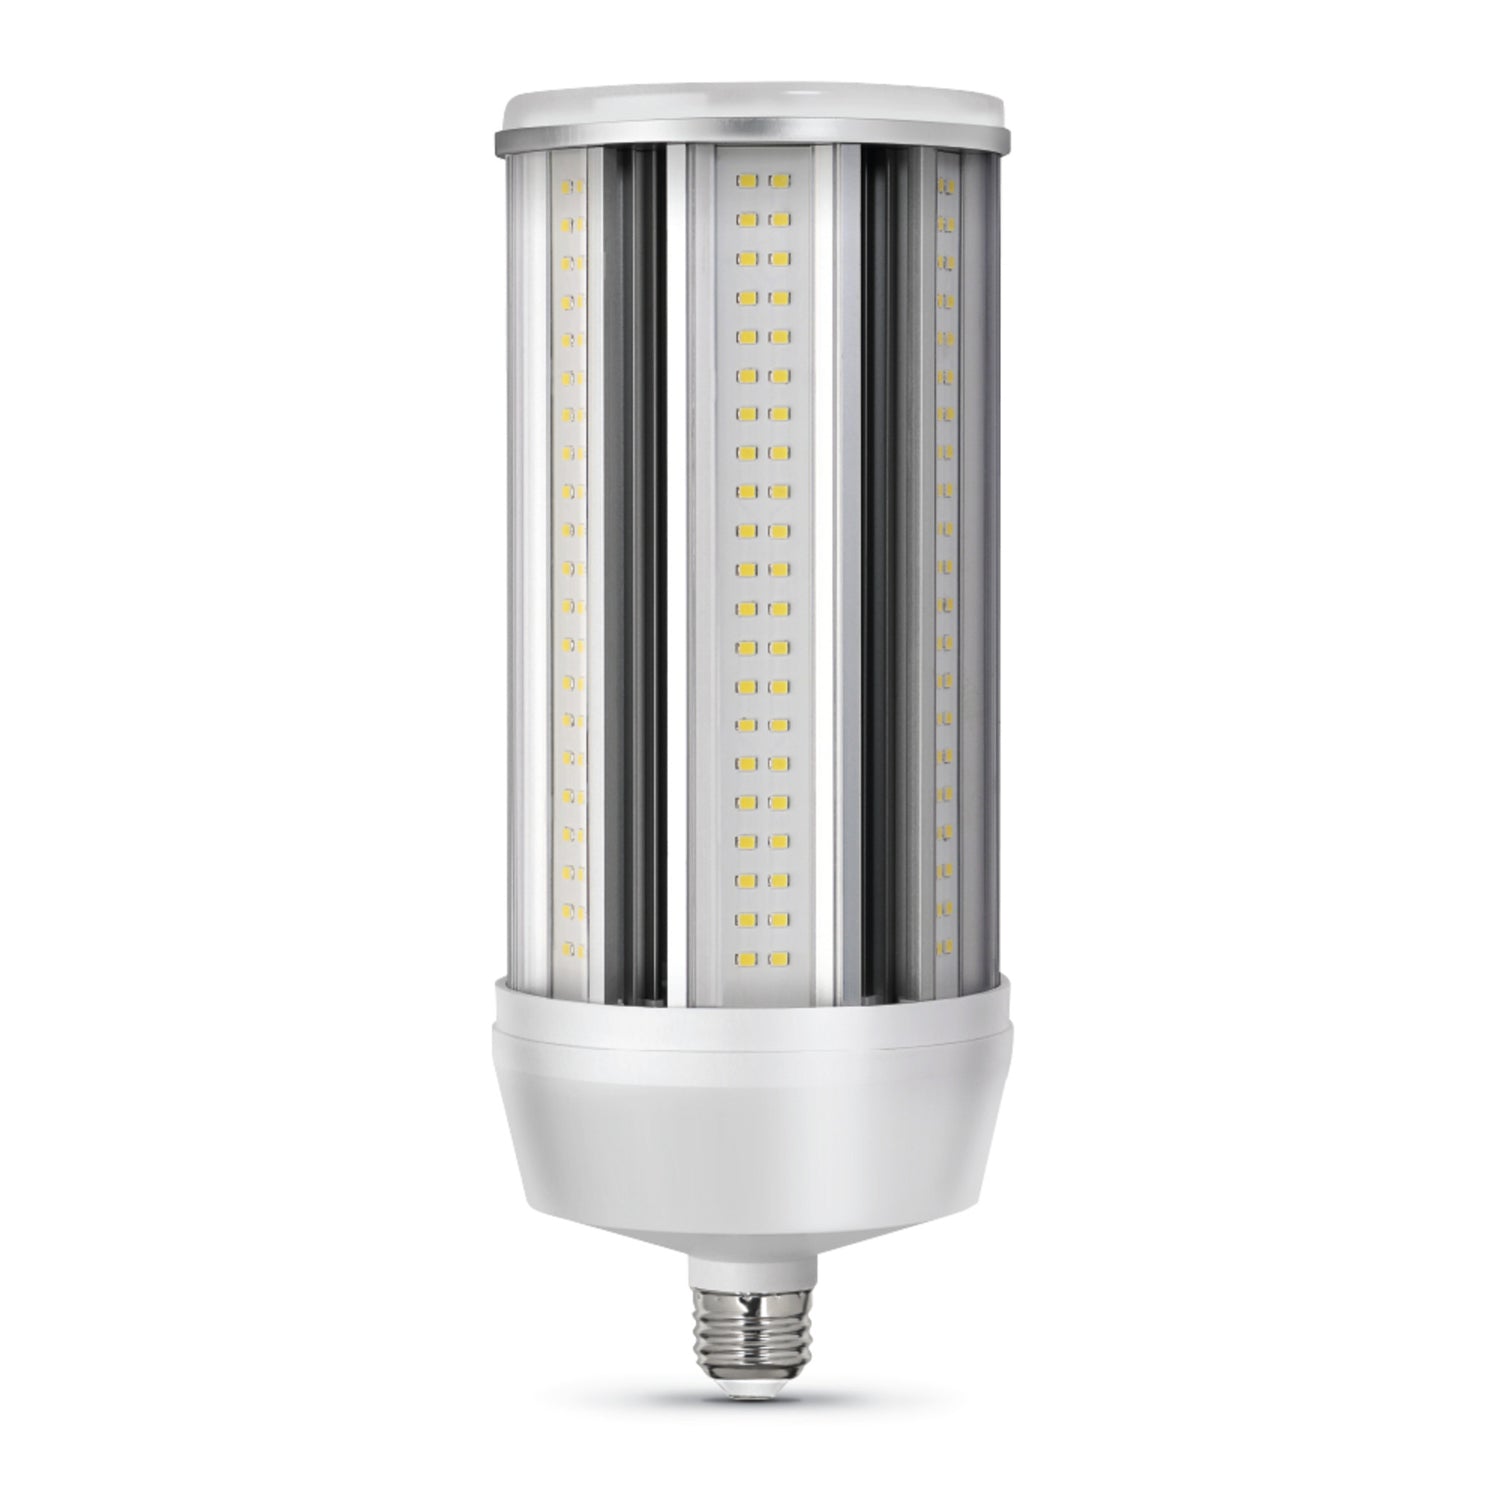 125W (750W Replacement) Daylight (5000K) E39/E26 Base Corn Cob LED Light Bulb